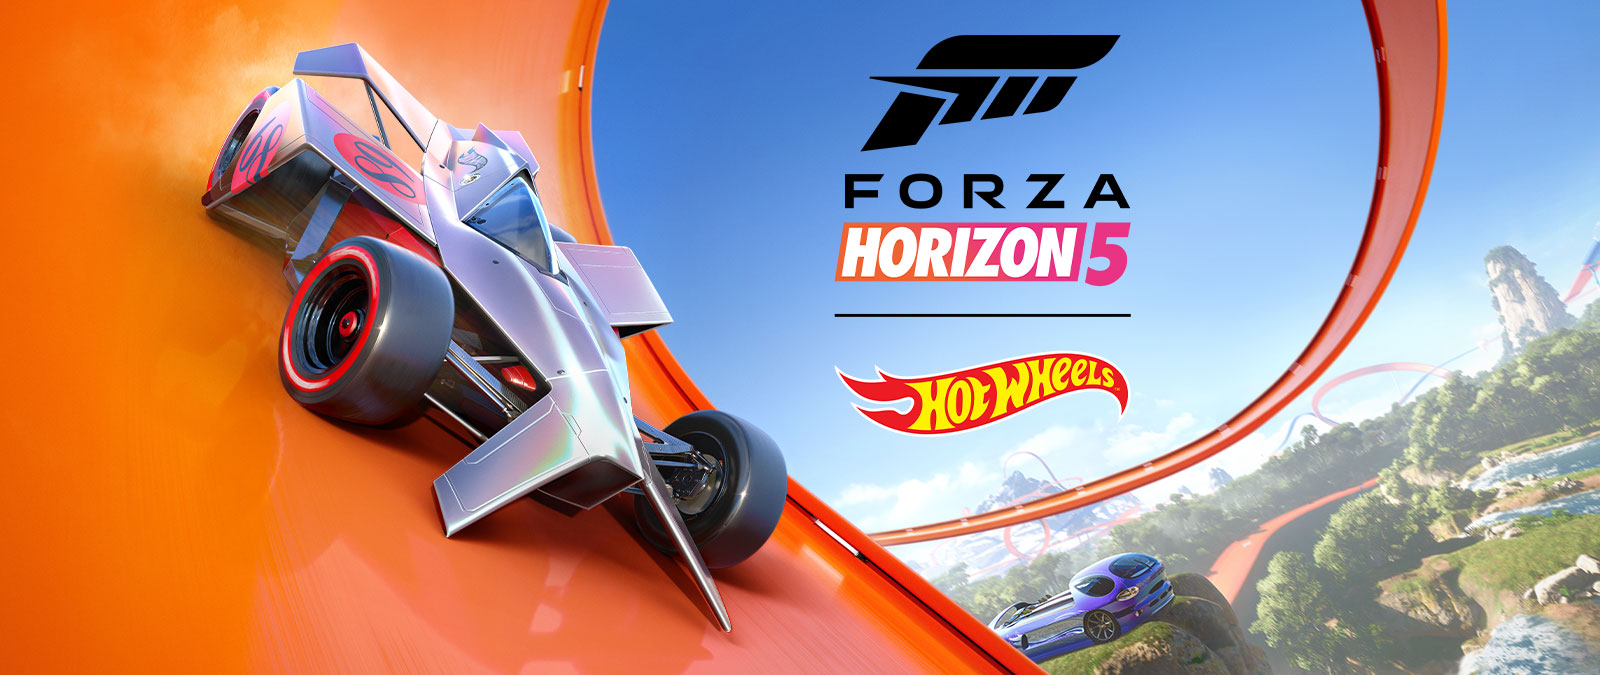 Forza Horizon 5、Hot Wheels 及一輛汽車繞著環形 Hot Wheels 賽道疾馳而過。